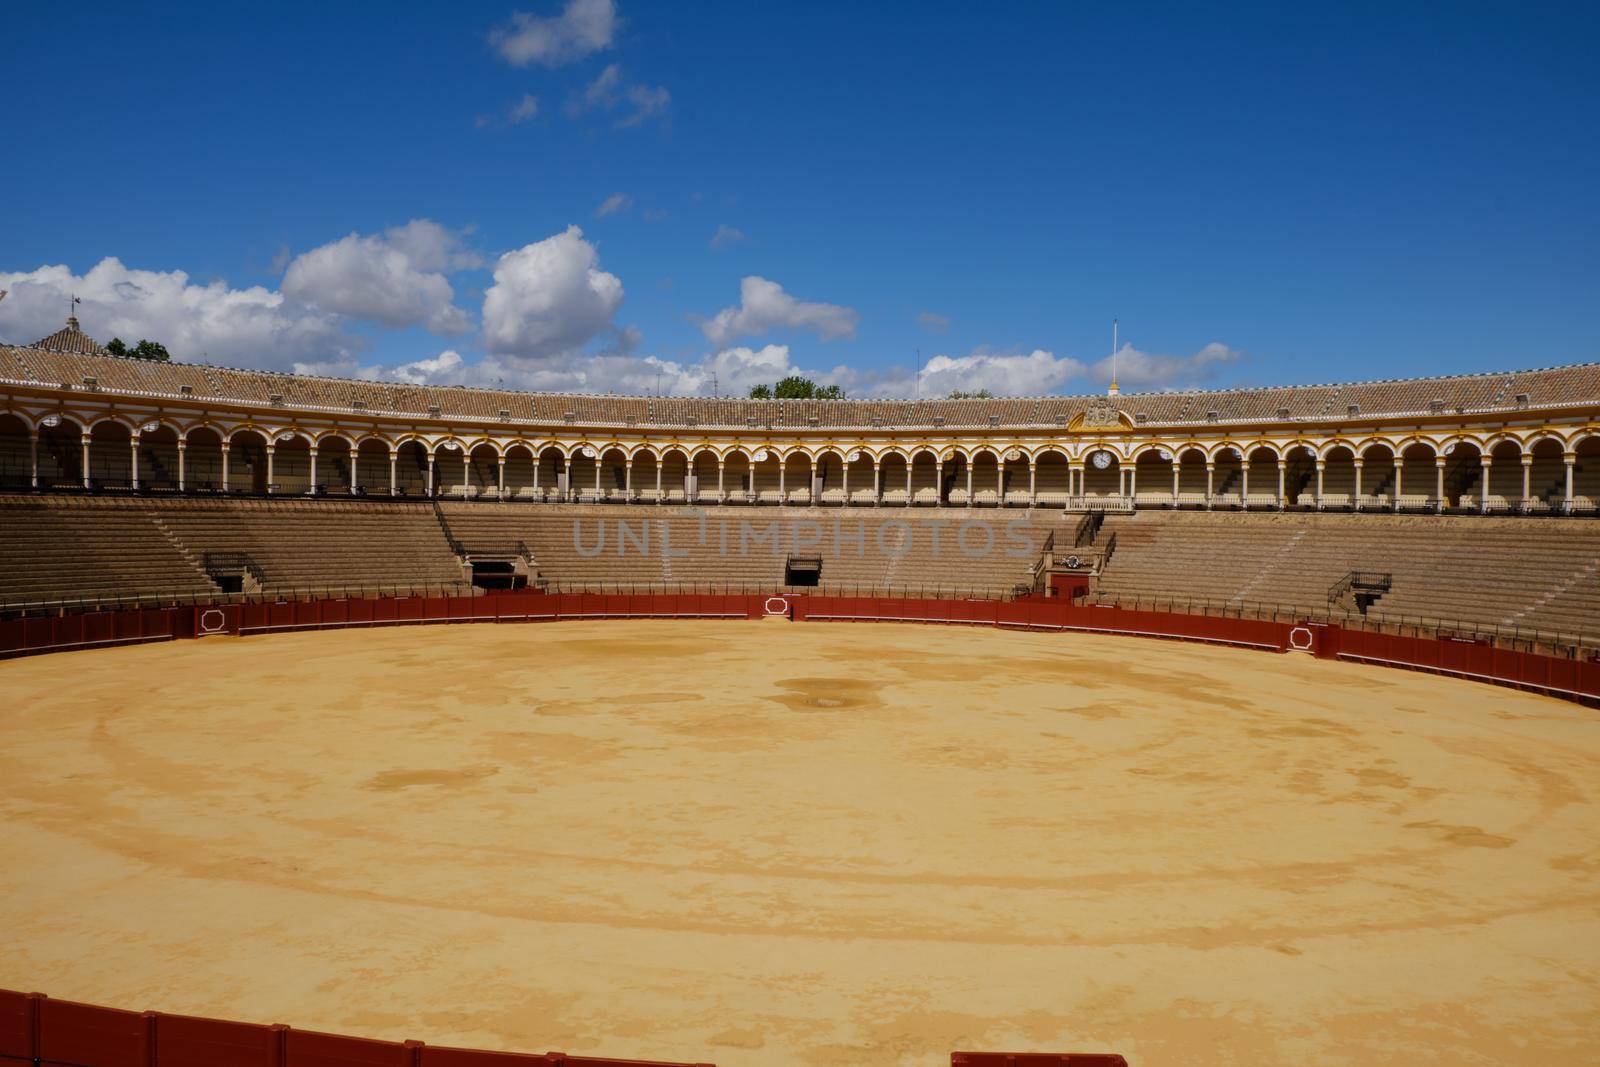 April 2019 Bullfighting arena (plaza de toros) in Seville, Real Maestranza de Caballeria de Sevilla, Spain. by Sandronize